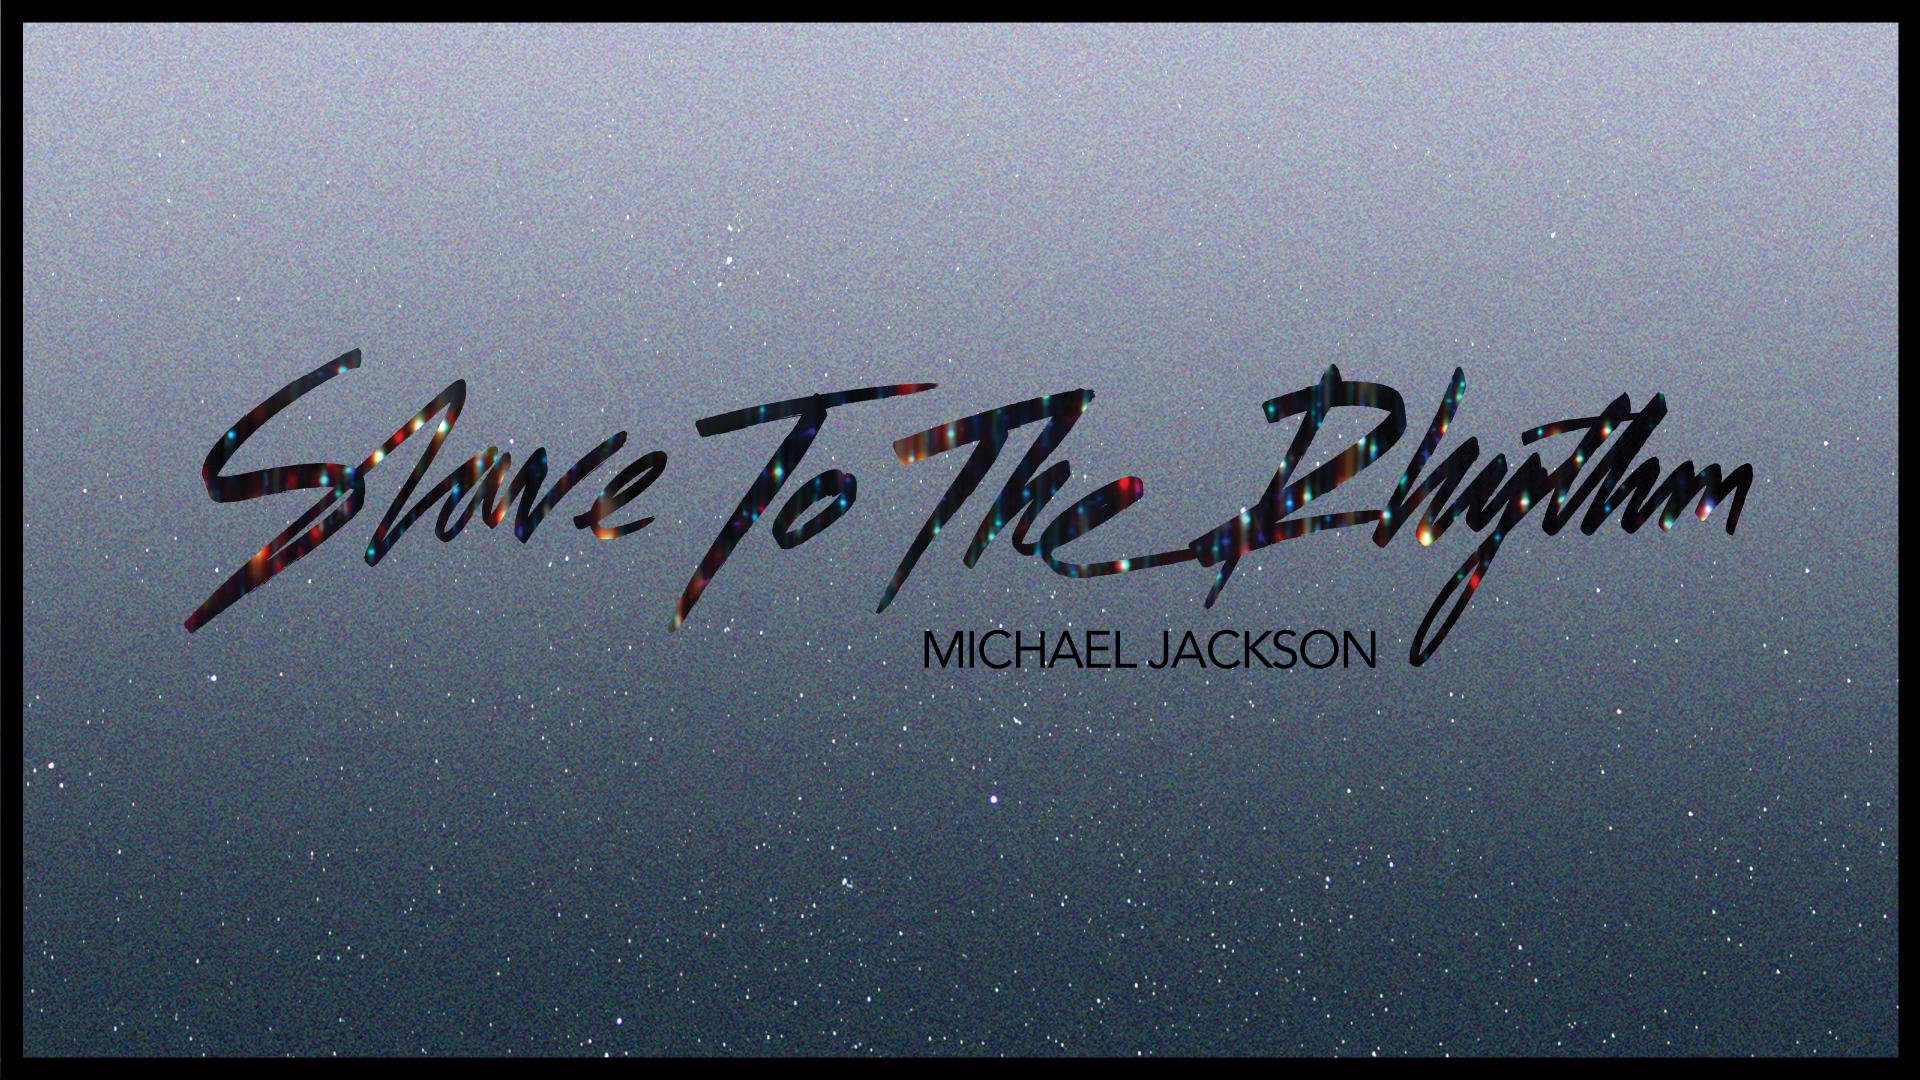 Michael Jackson - Slave to the Rhythm (Official Audio)